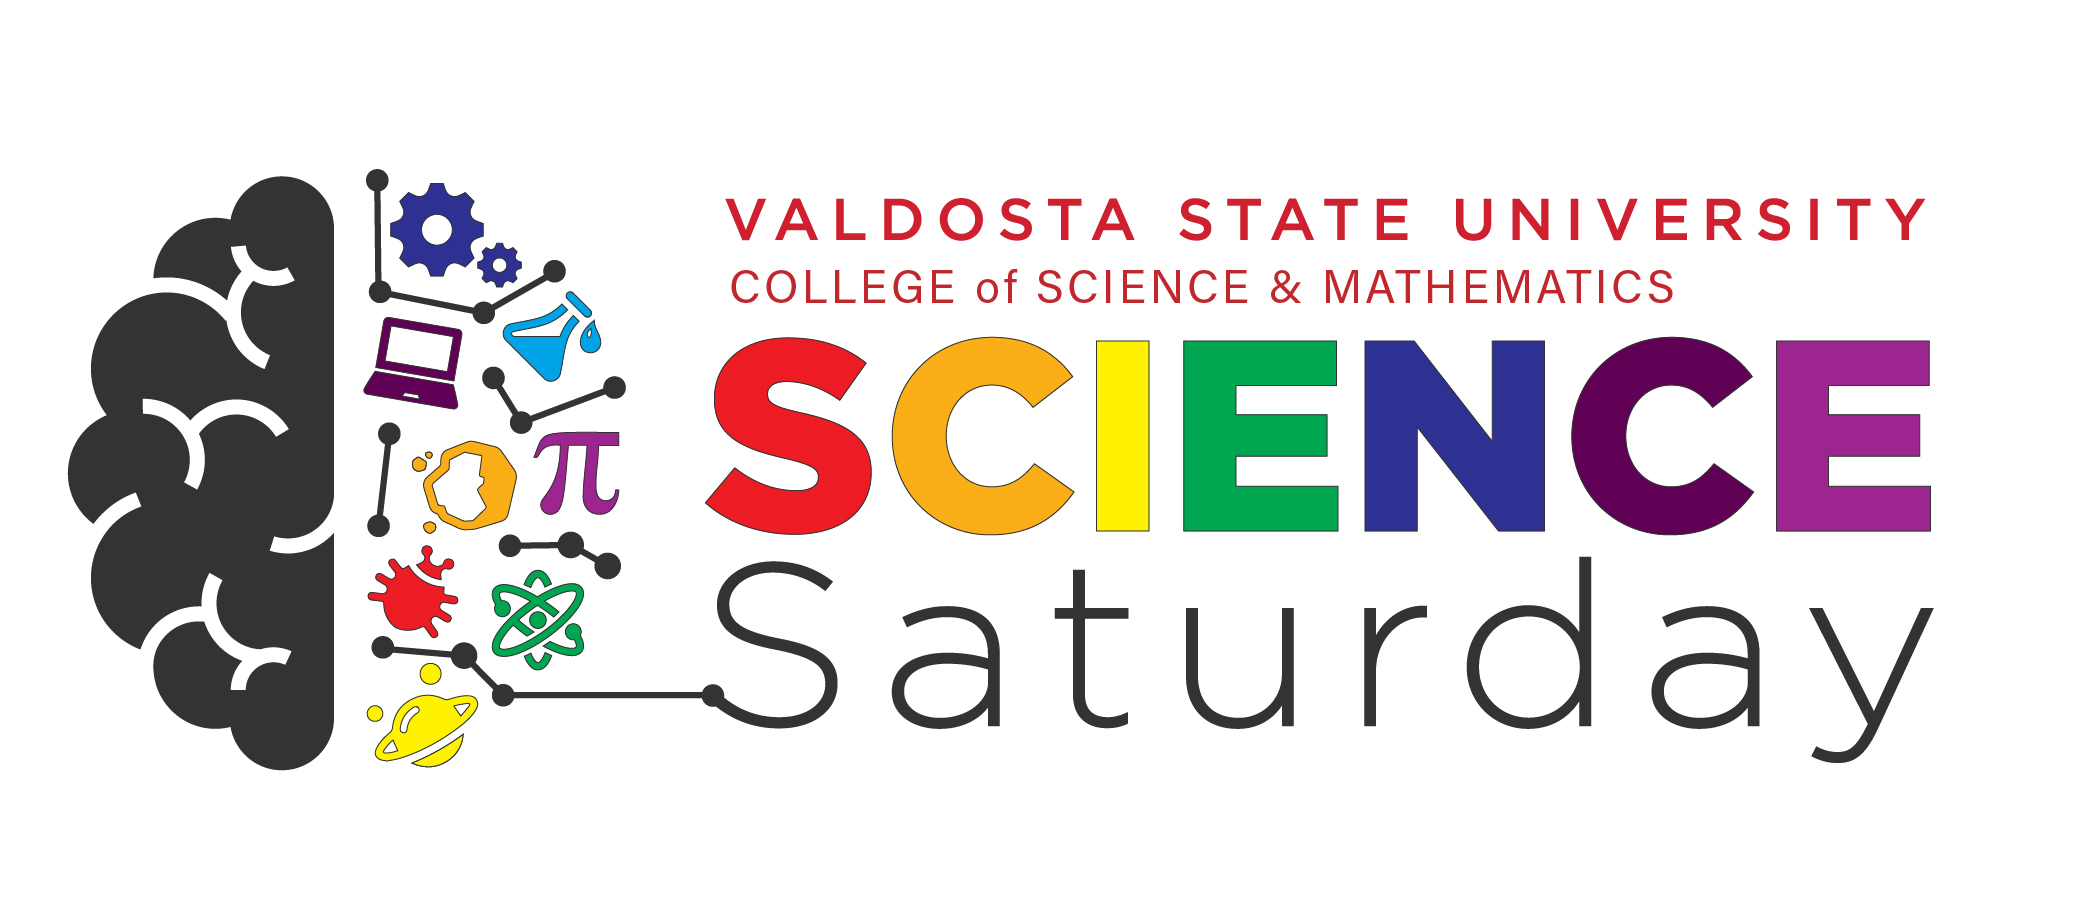 VSU Hosts Science Saturday Oct. 14